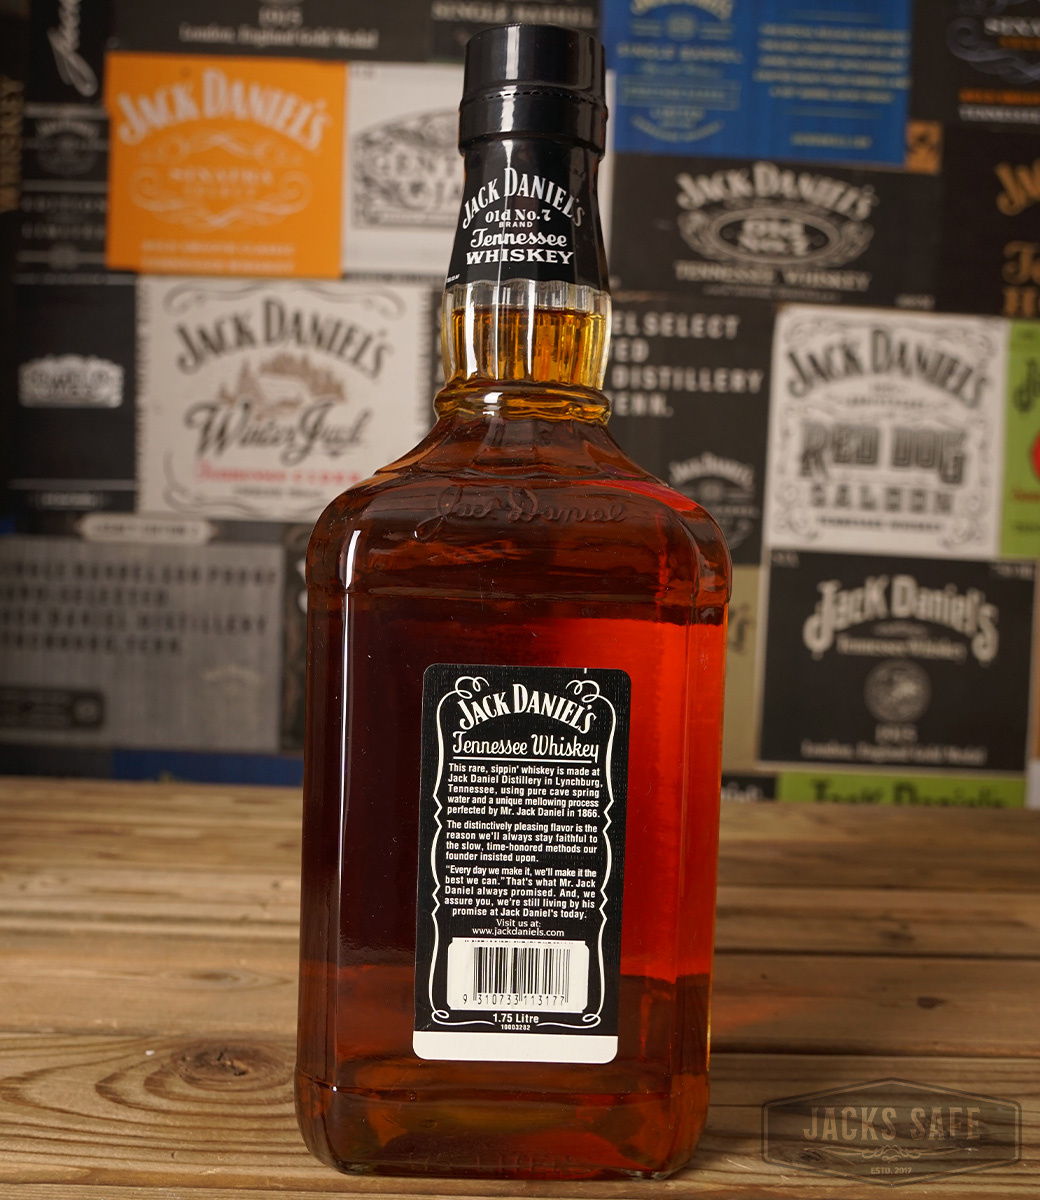 Jack Daniels Tennessee Honey 100ml - Legacy Wine and Spirits